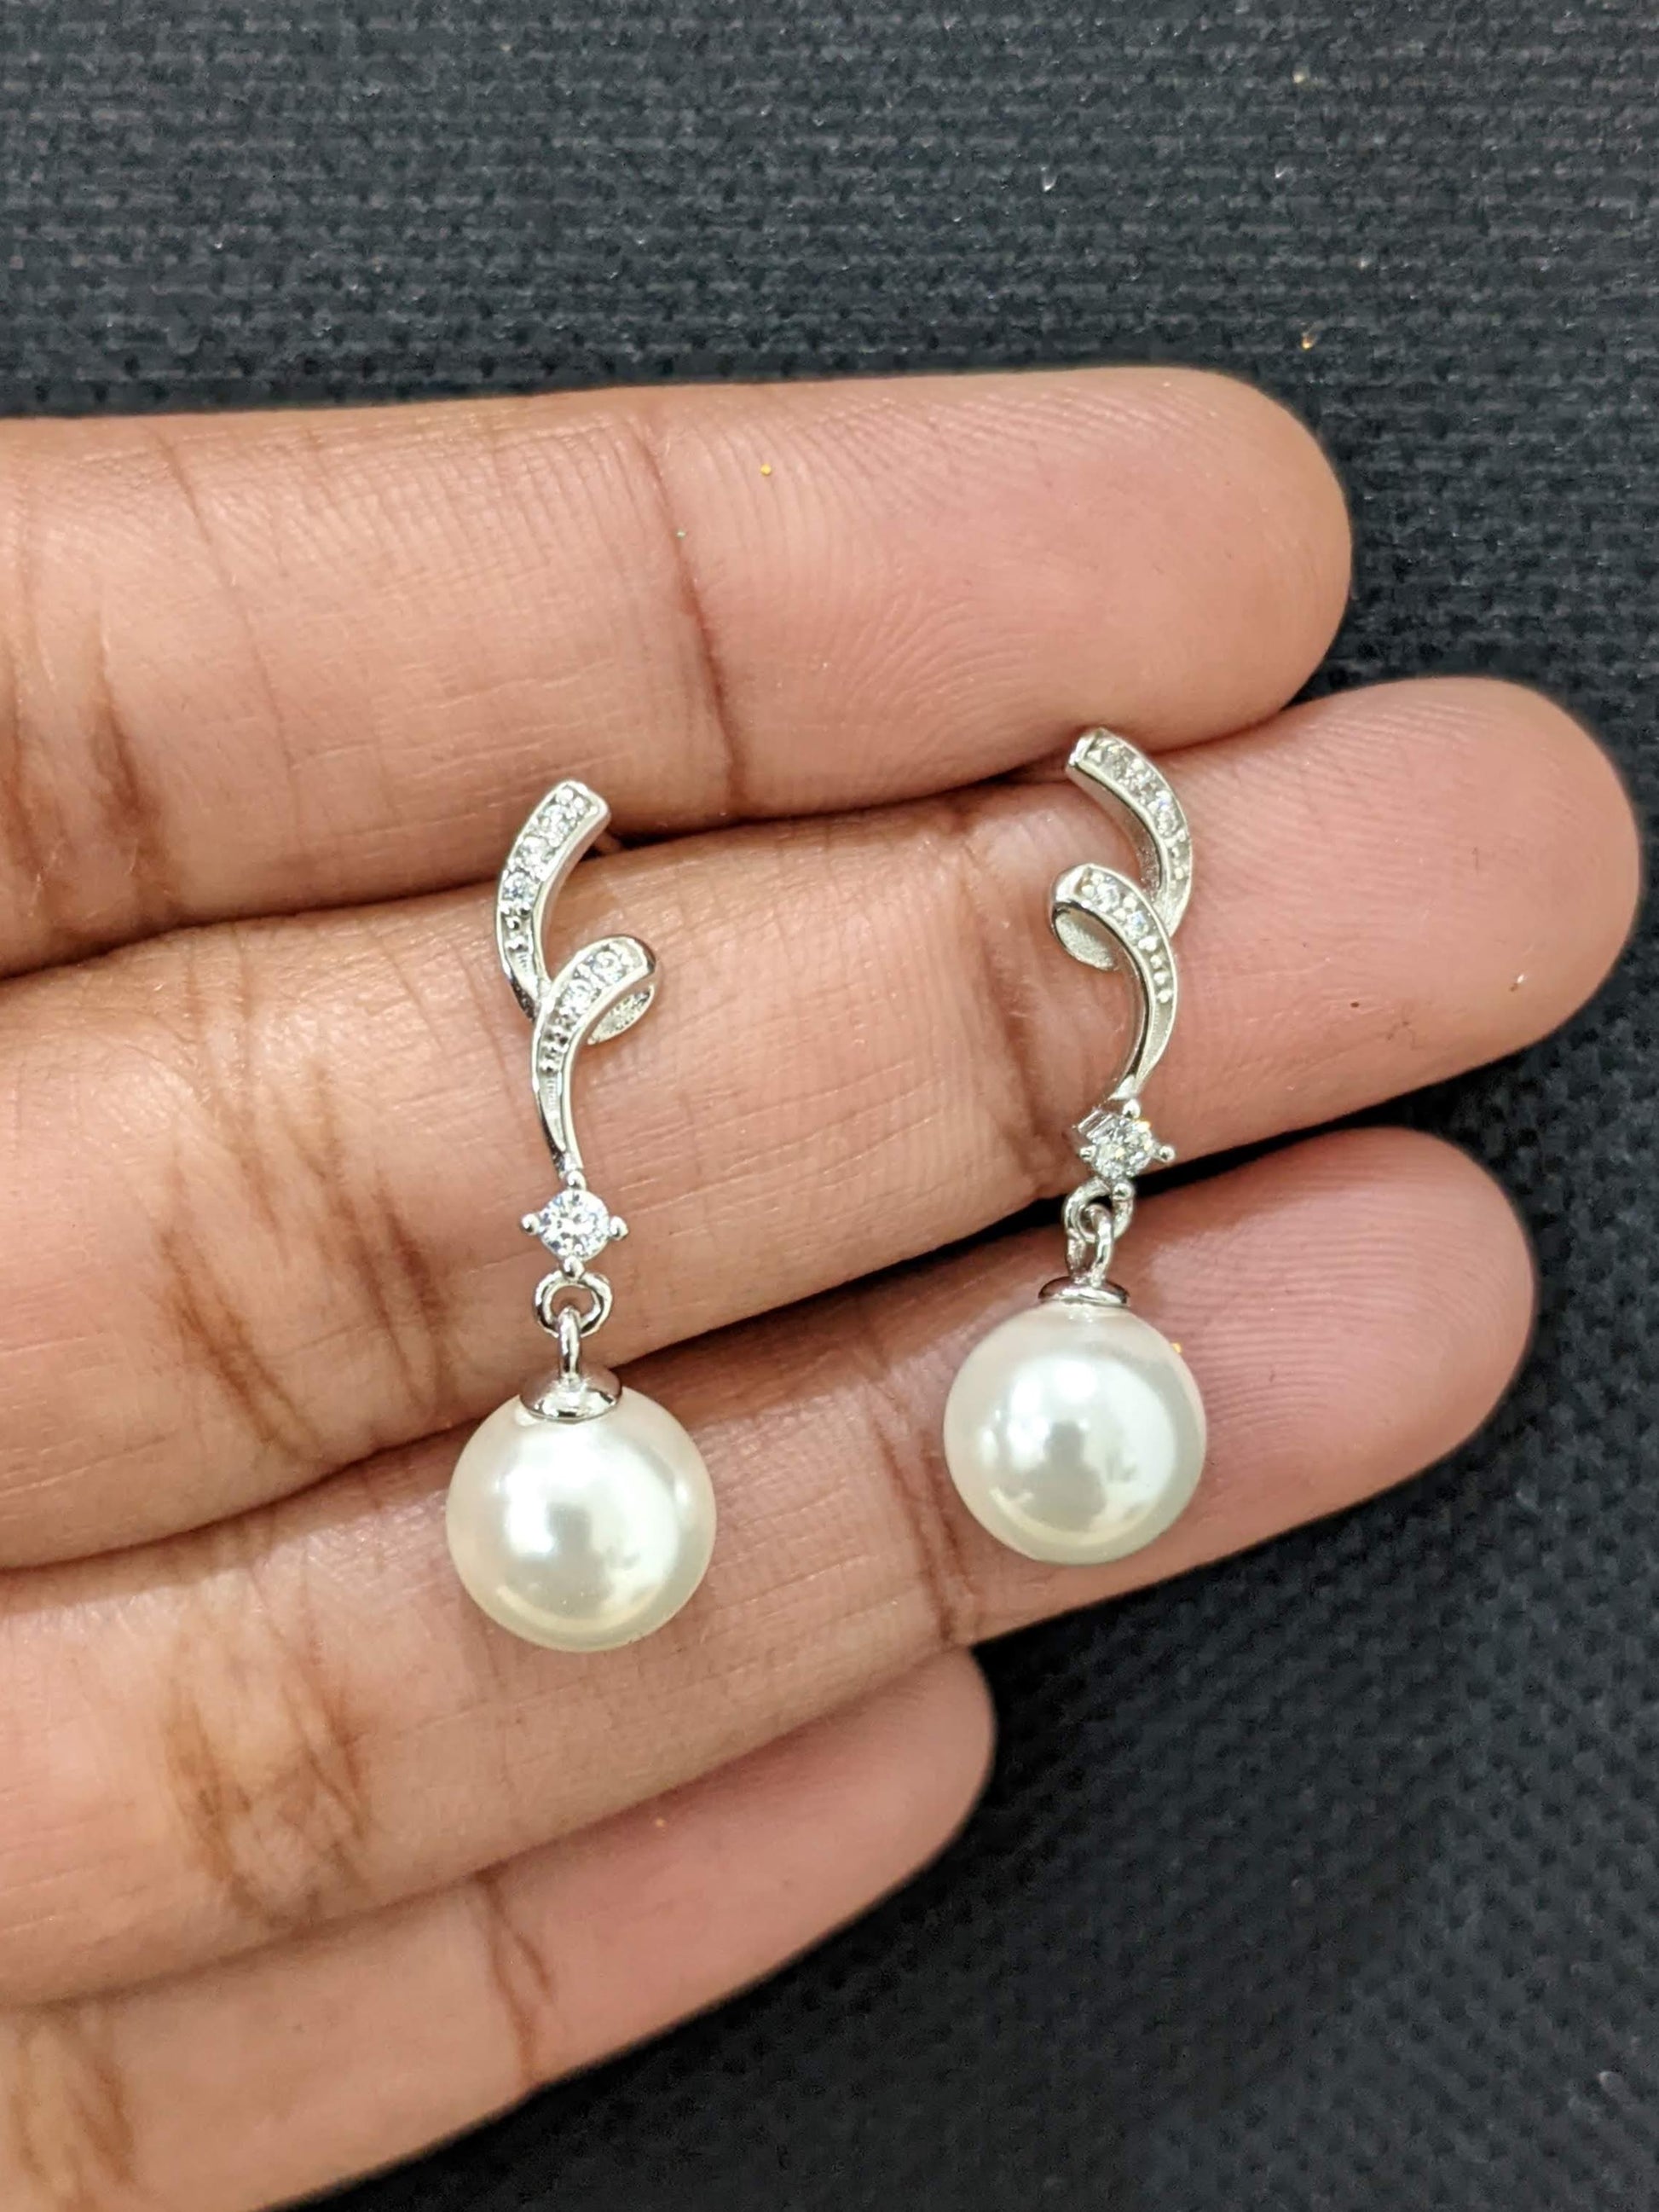 Sterling Silver Twisted design Faux Pearl Earrings - Simpliful